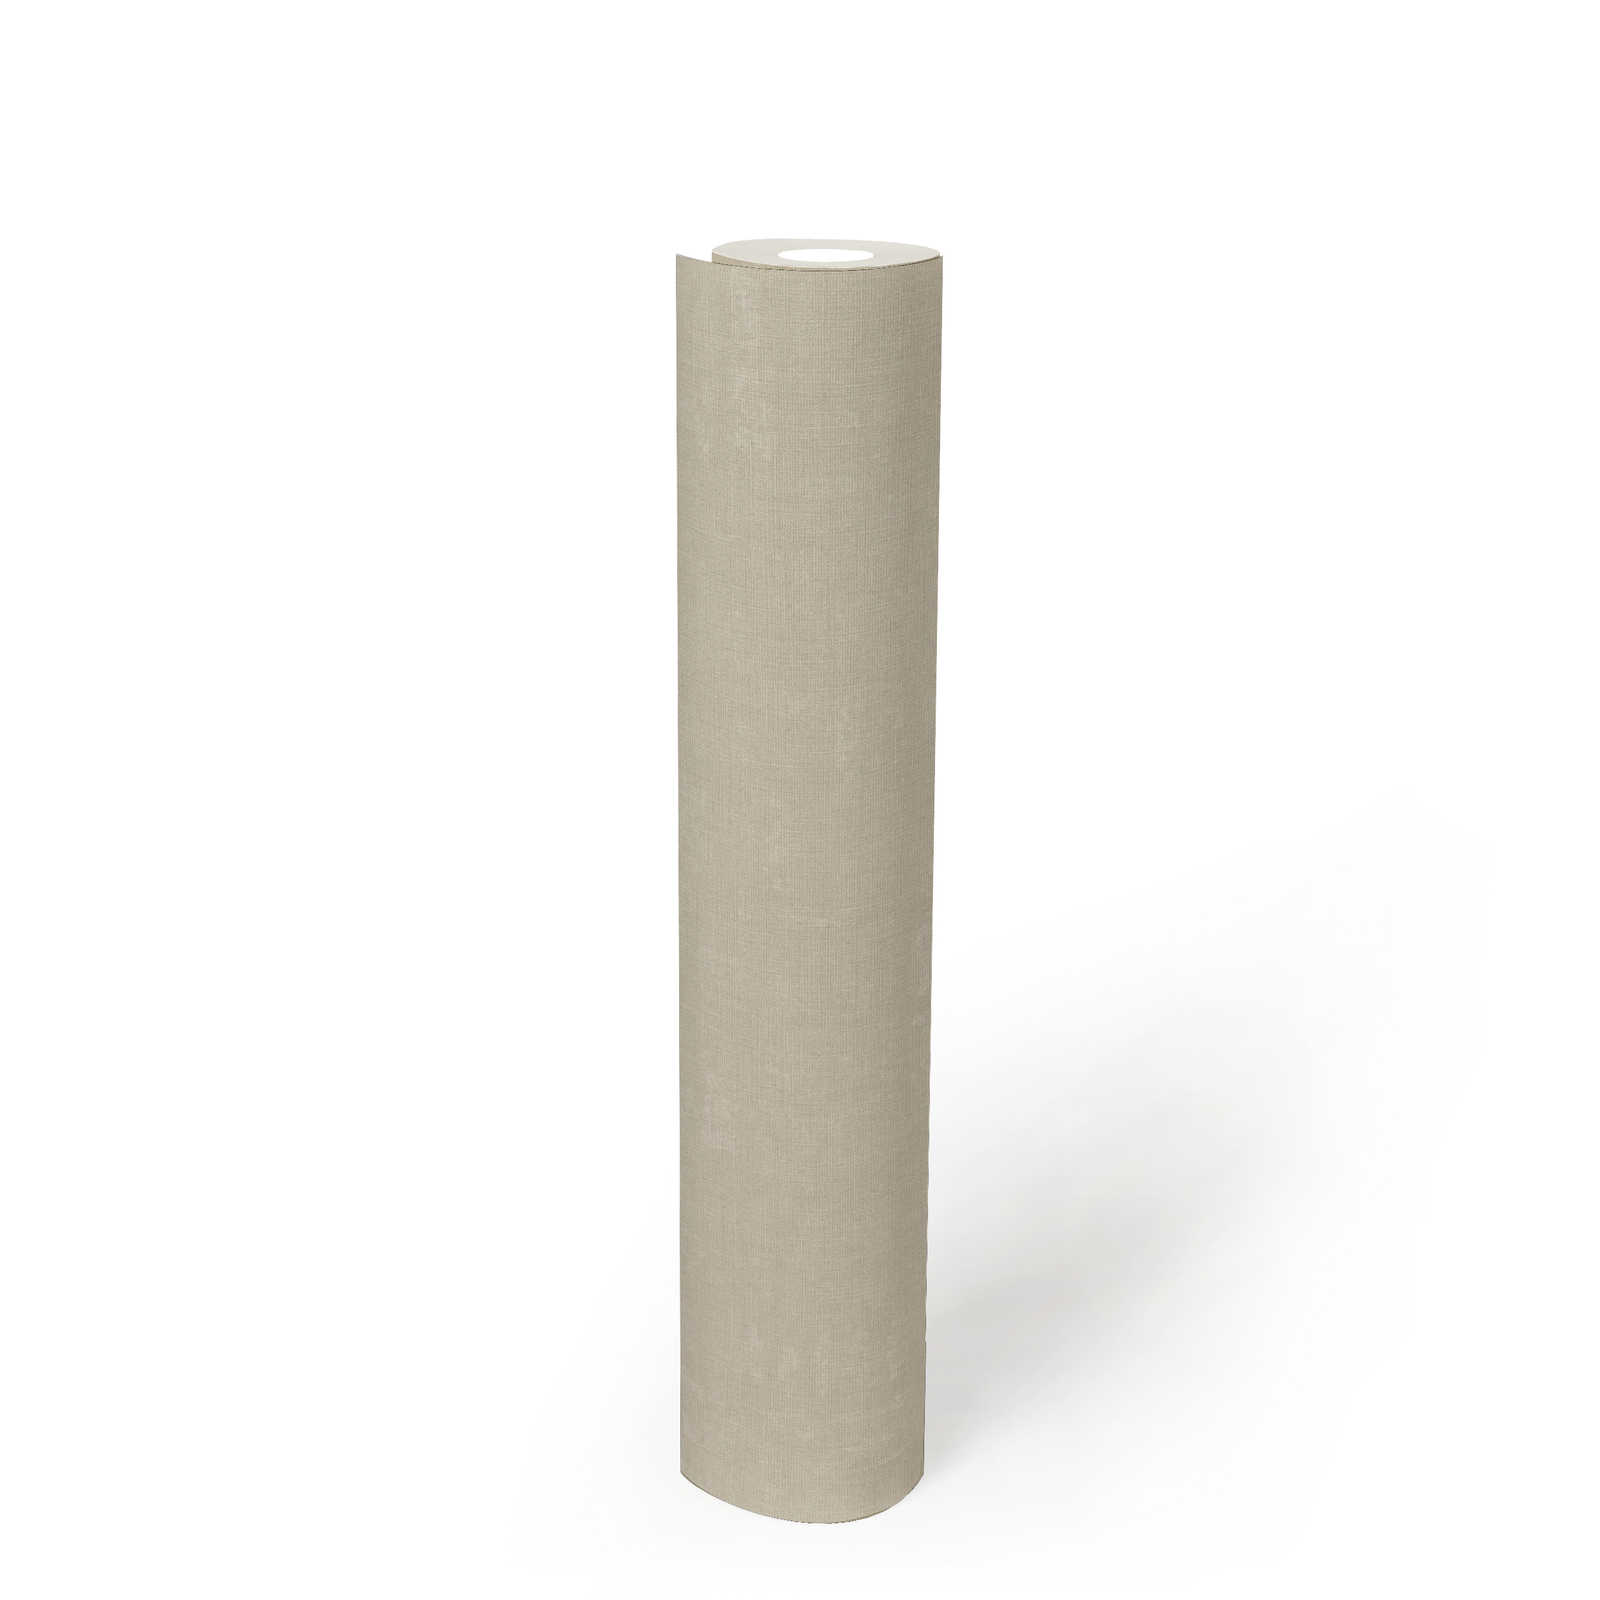             Non-woven wallpaper plain with texture effect - grey, beige
        